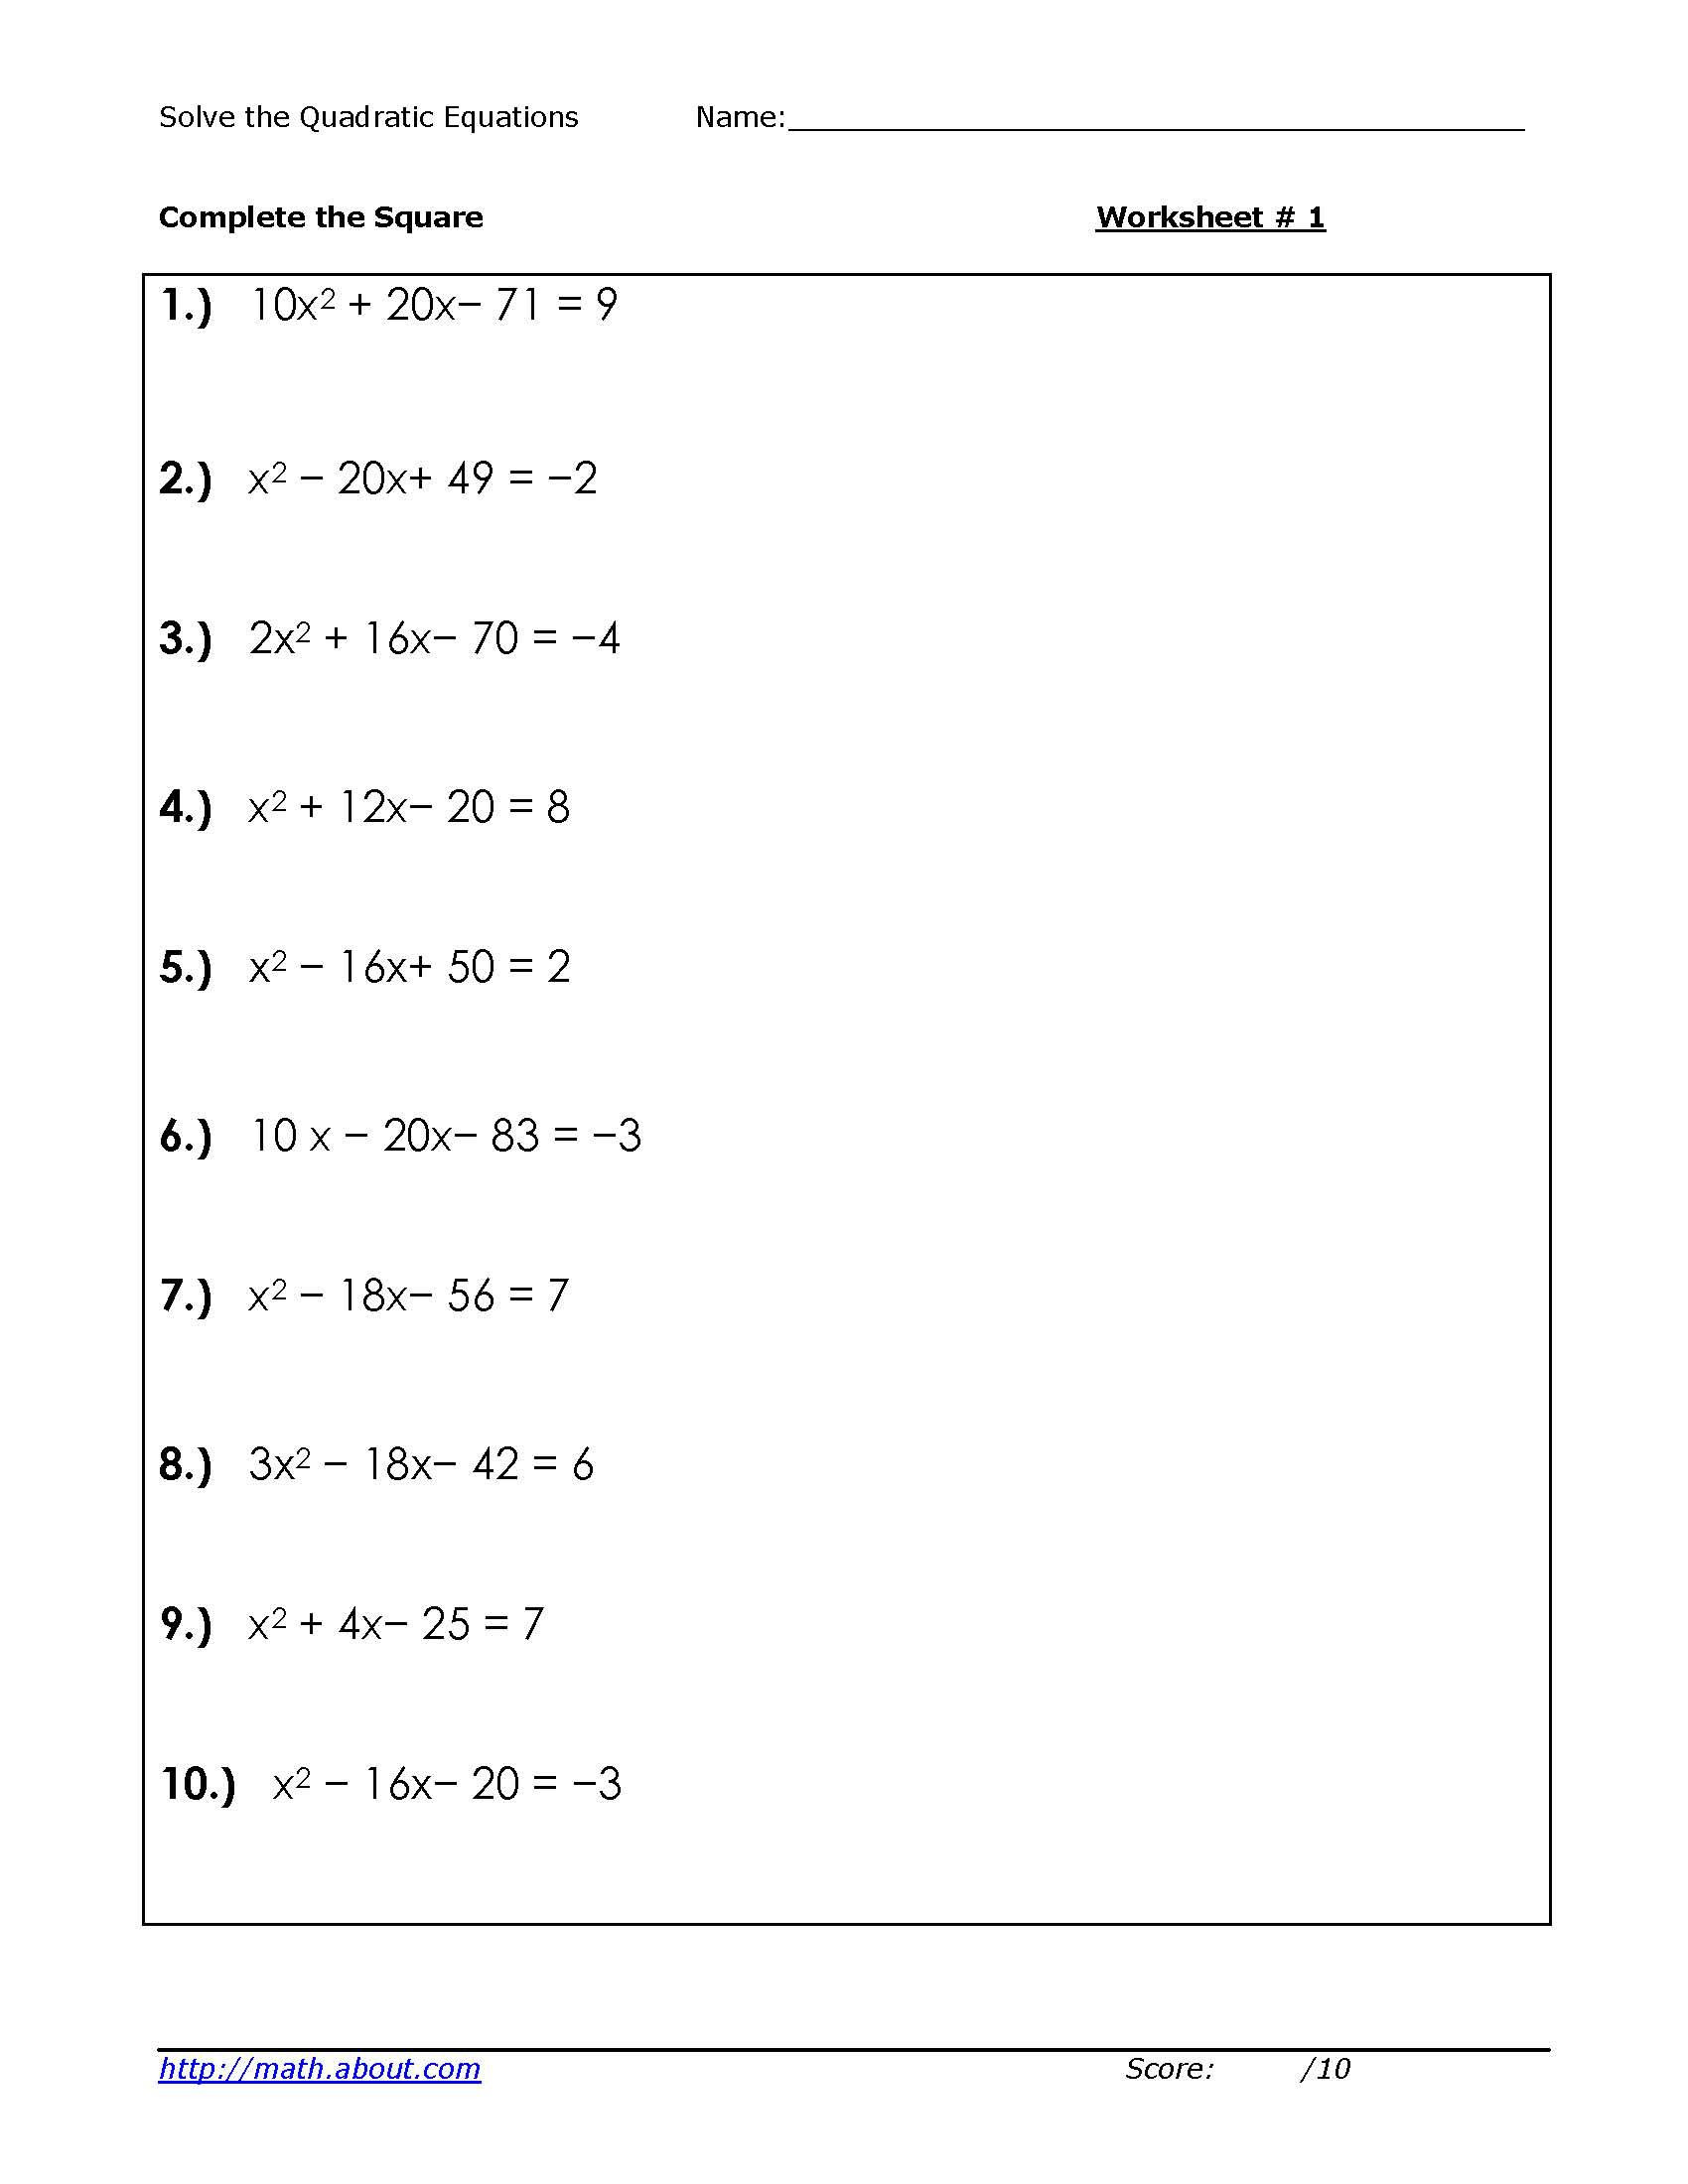 Algebra 2 Worksheet Pdf solve Quadratic Equations by Peting the Square Worksheets